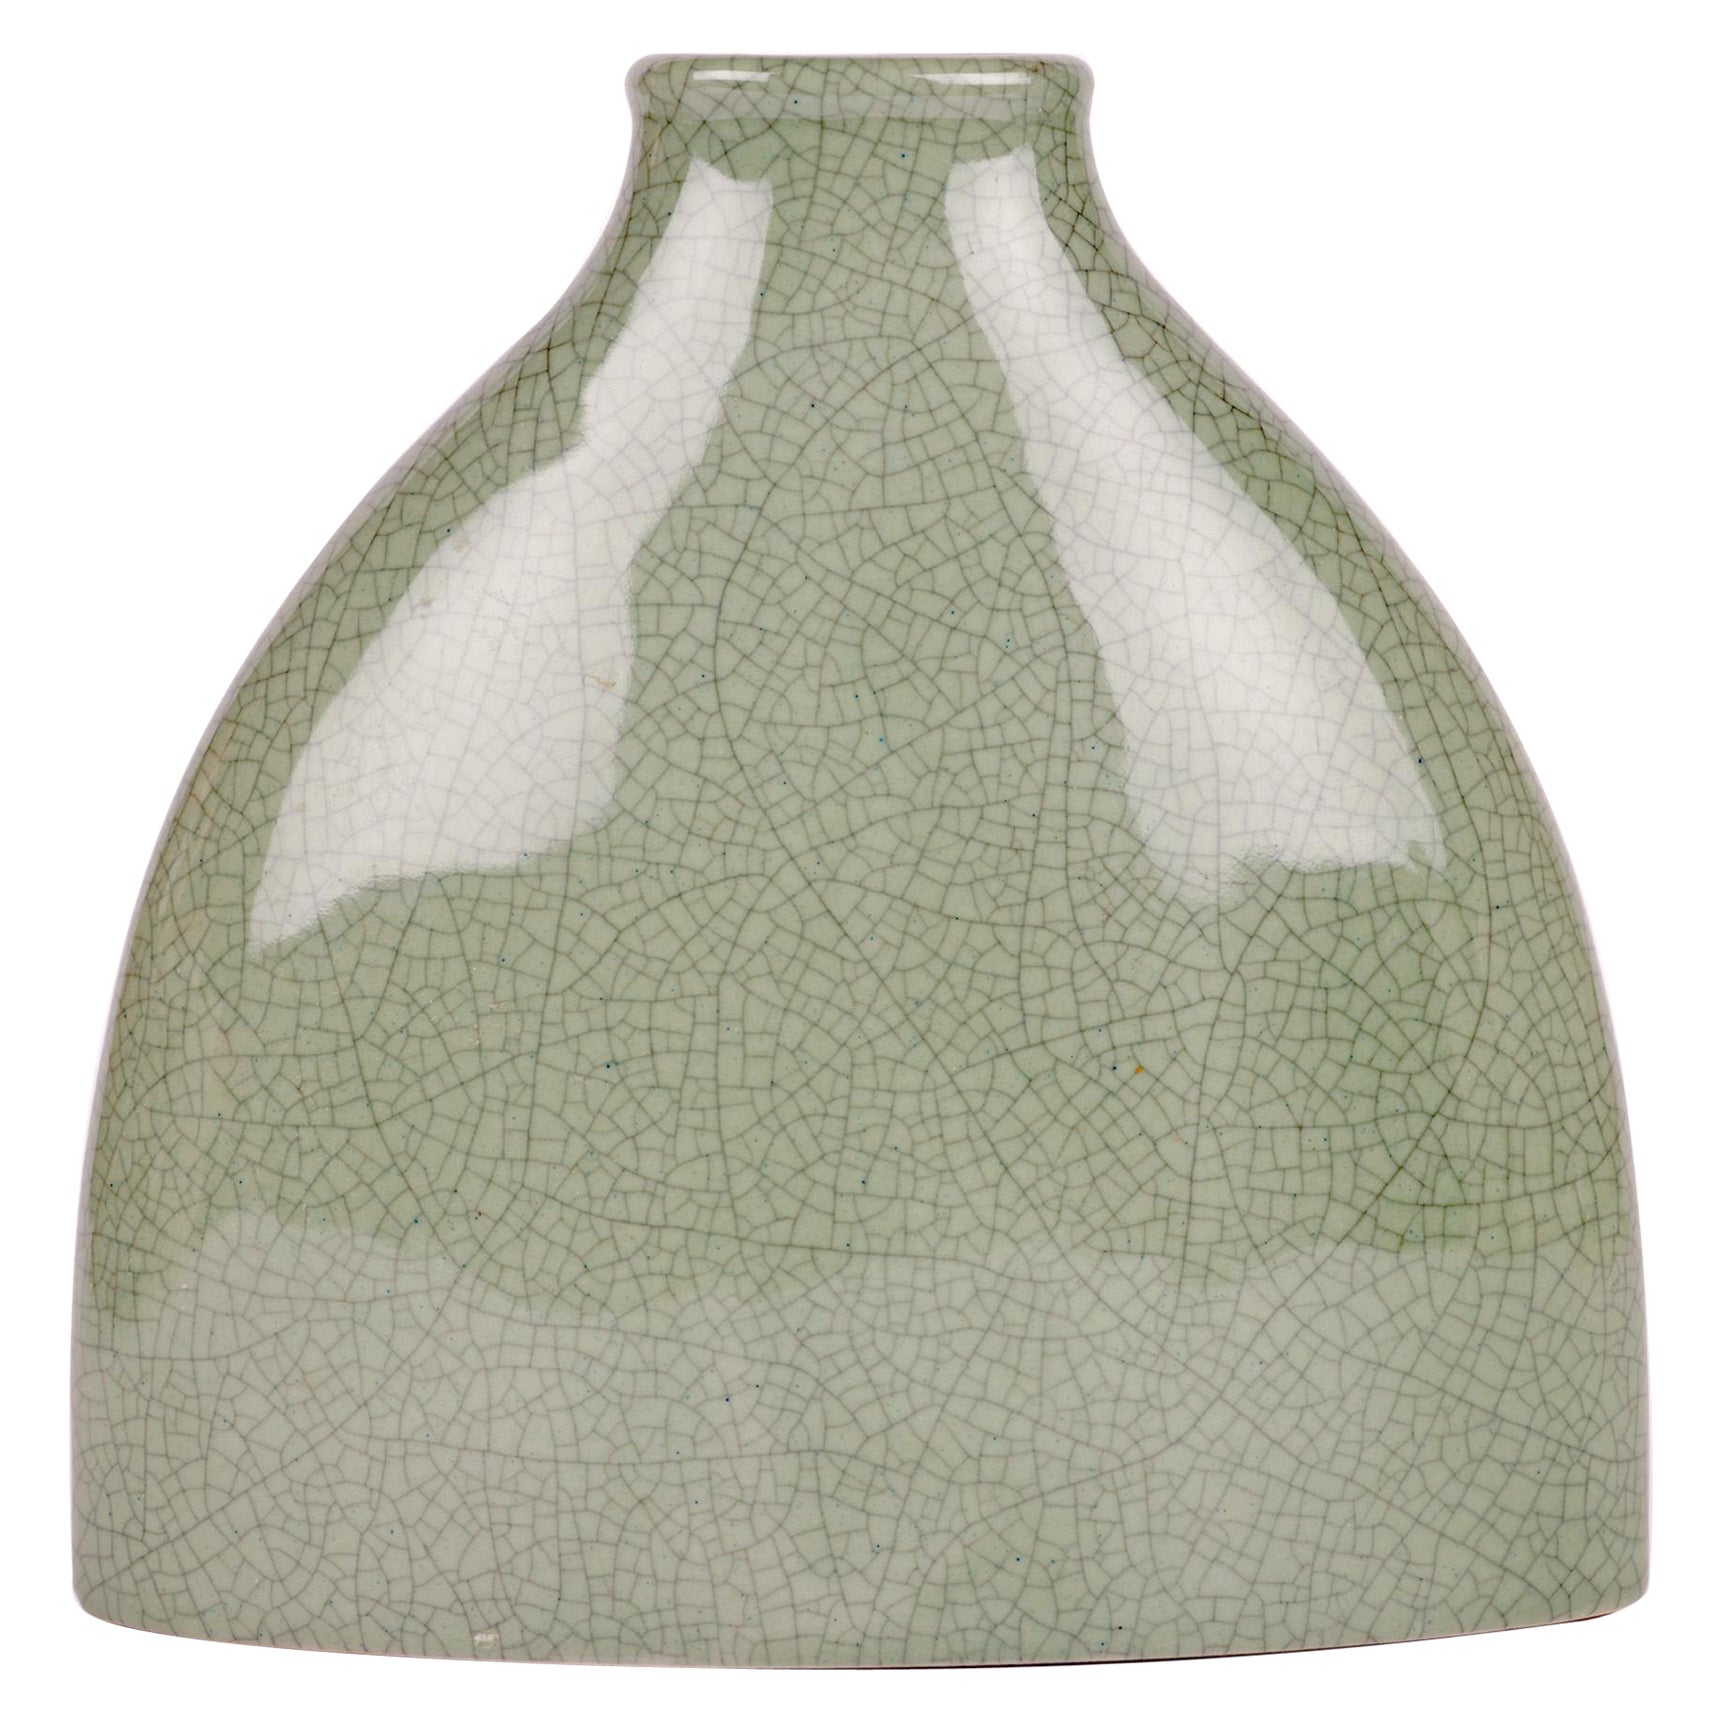 South East Asian Porcelain Celadon Glazed Craquelure Bottle Vase For Sale